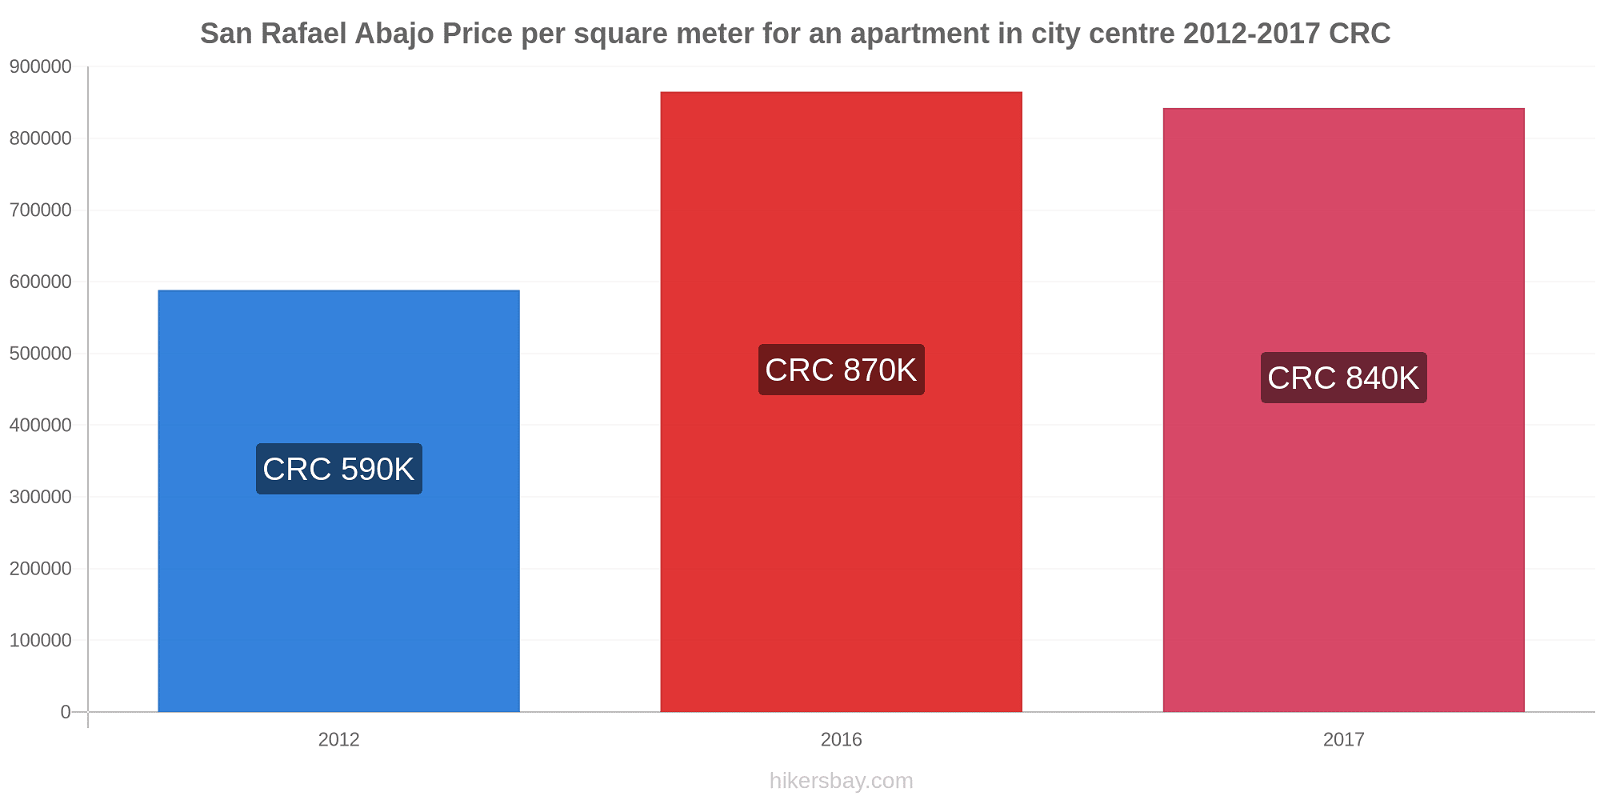 San Rafael Abajo price changes Price per square meter for an apartment in city centre hikersbay.com